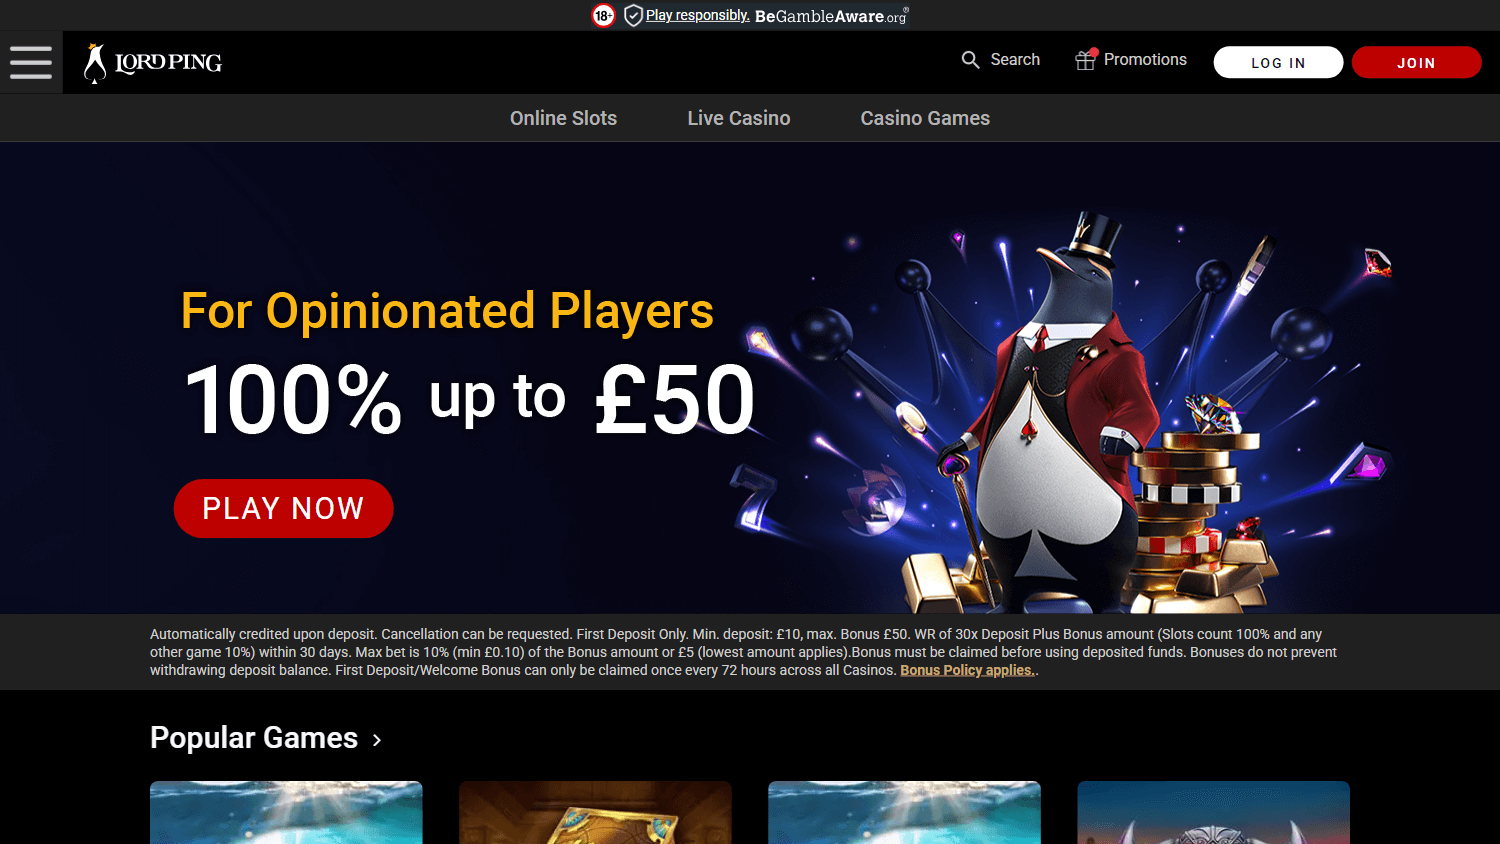 lord_ping_casino_uk_homepage_desktop